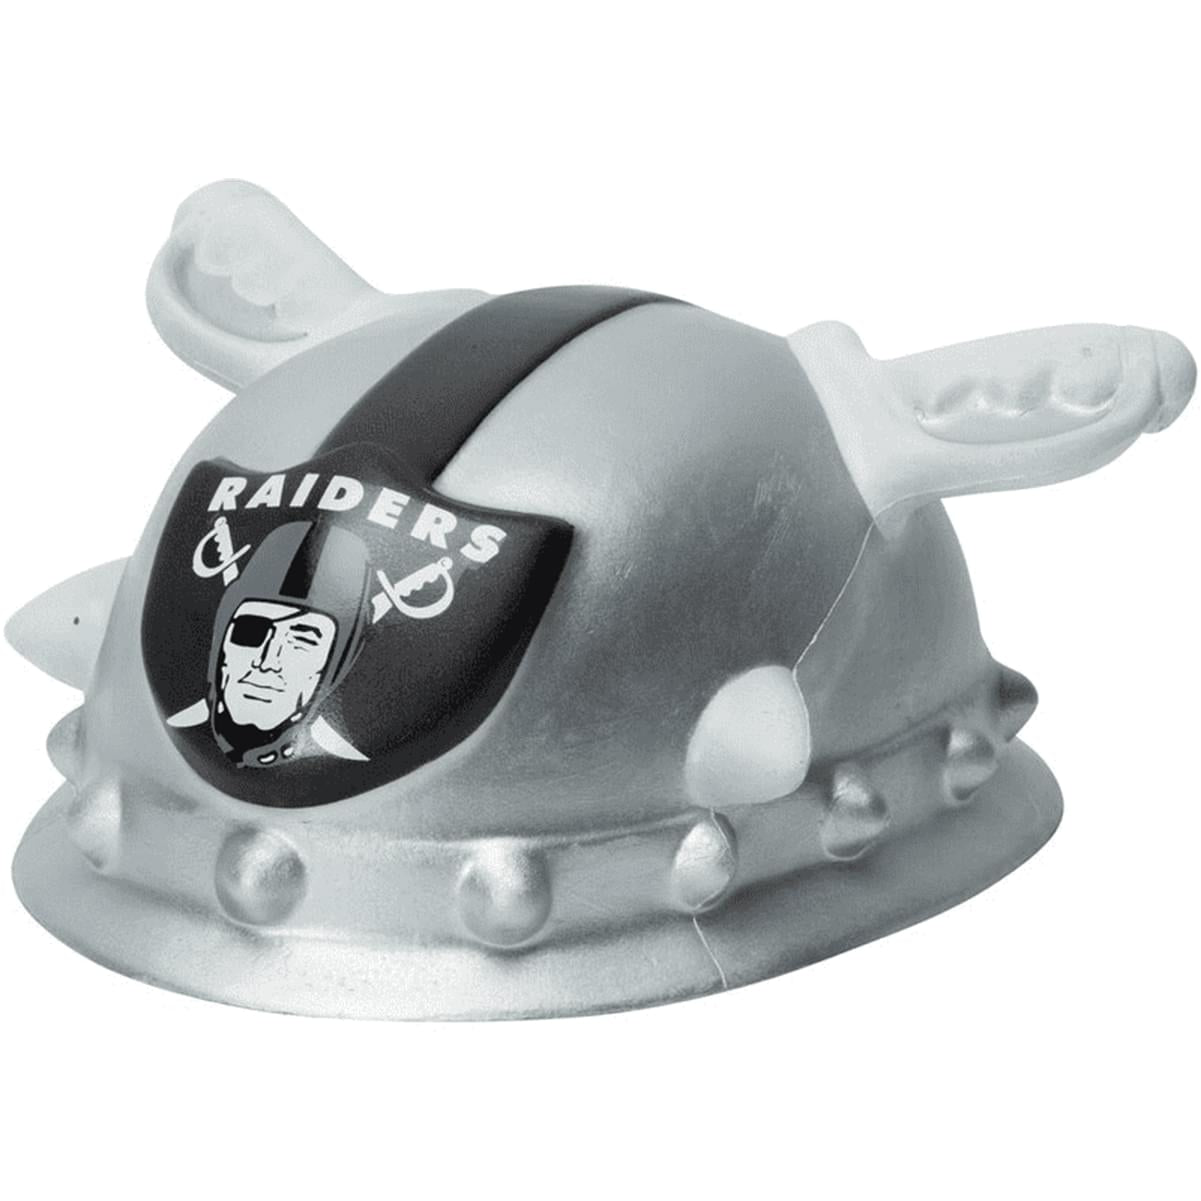 NFL Team Mascot Foamhead Hat: Oakland Raiders